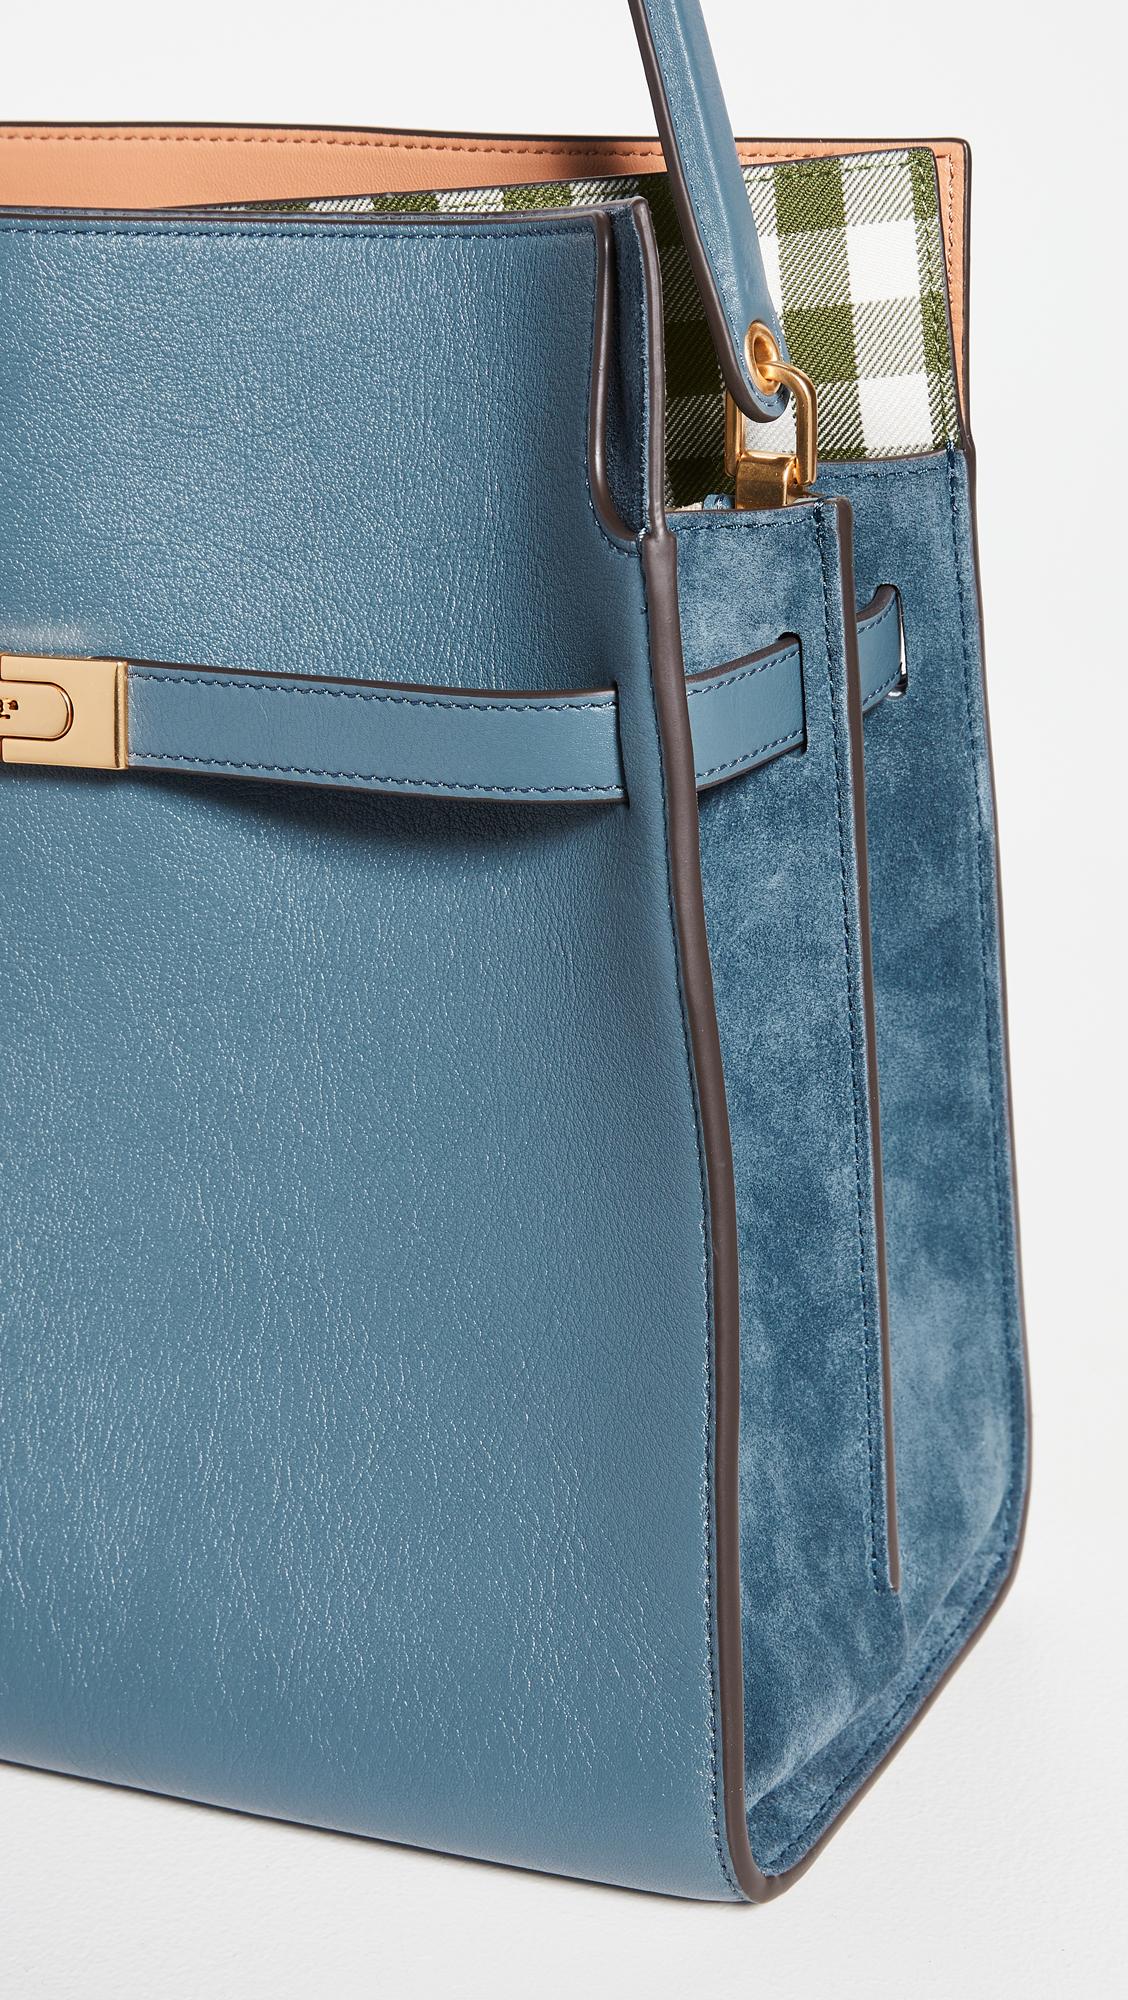 Lee radziwill petite leather handbag Tory Burch Blue in Leather - 28579741